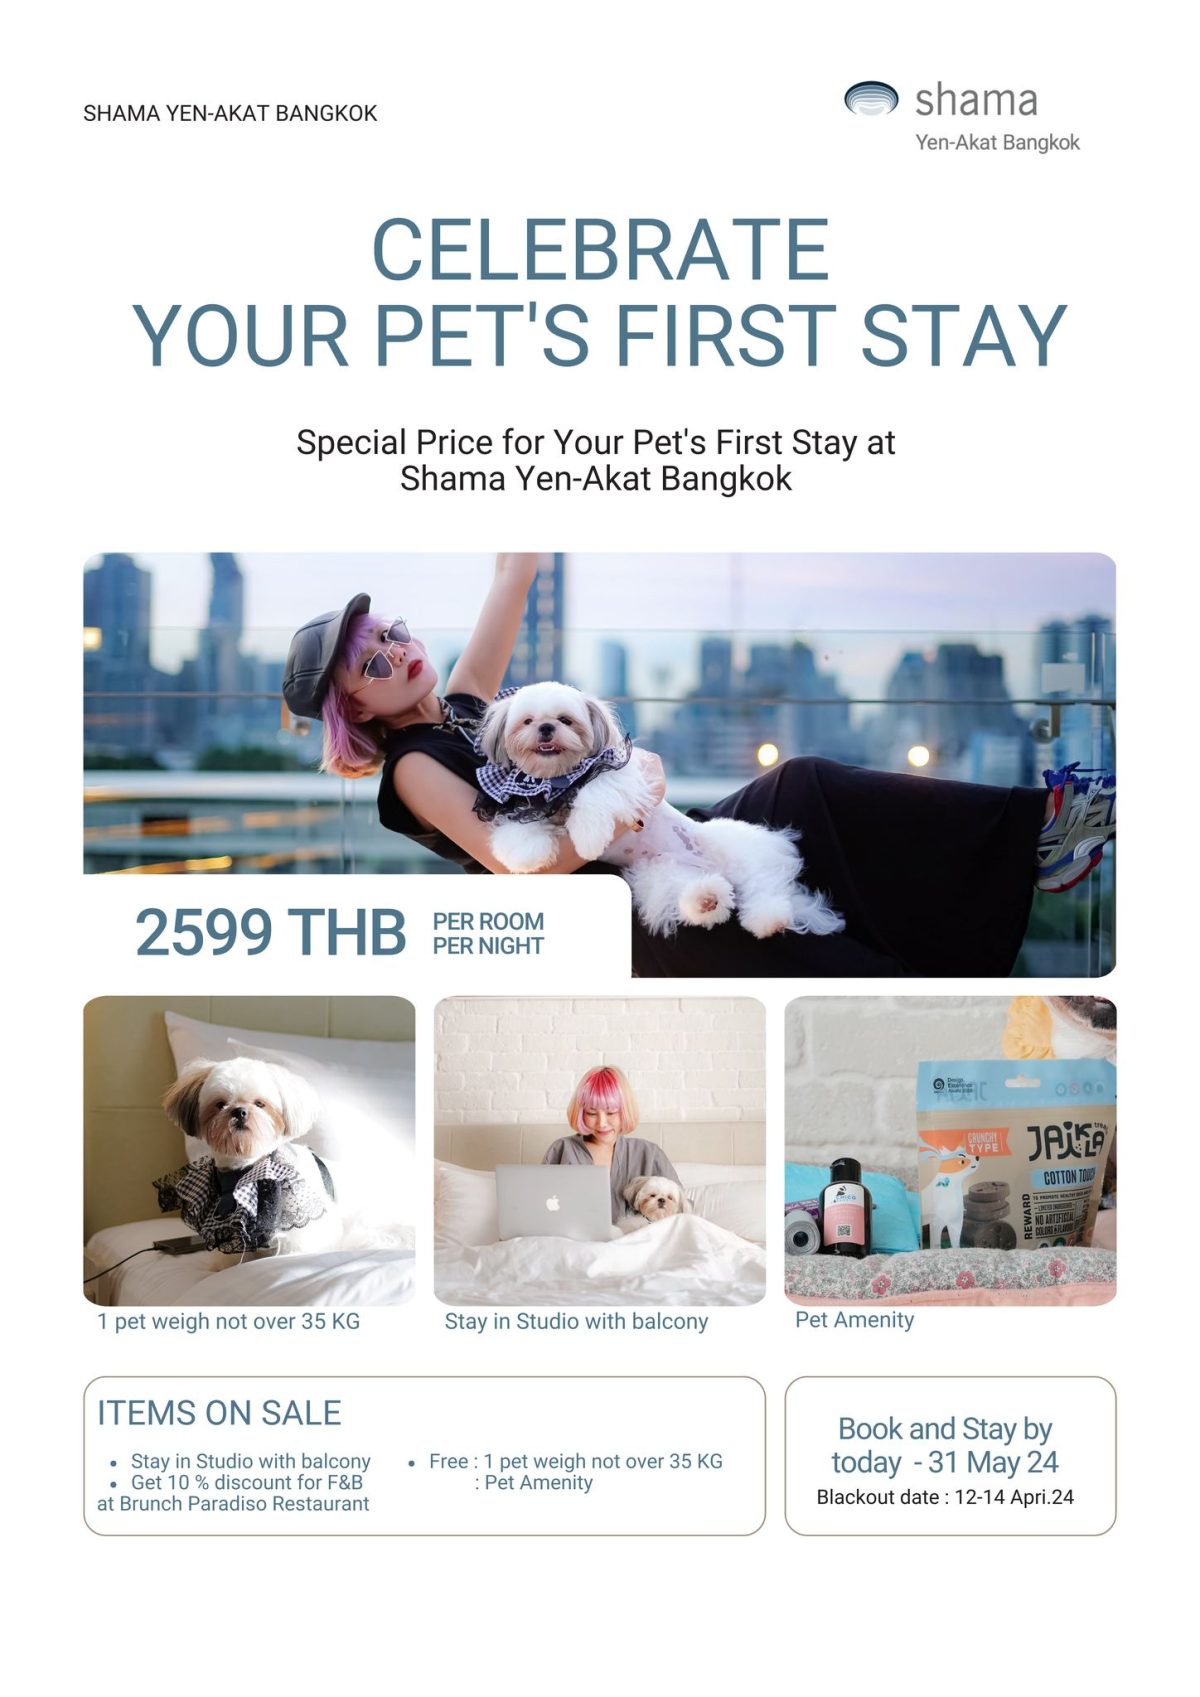 Pet Friendly Package: Special Price for Your Pet's First Stay โปรแรงต้อนรับซัมเมอร์สำหรับการเข้าพักครั้งแรกกับแพคเก็จพิเศษเอาใจคนรักสัตว์ เพียง 2,599 บาท ต่อ 1